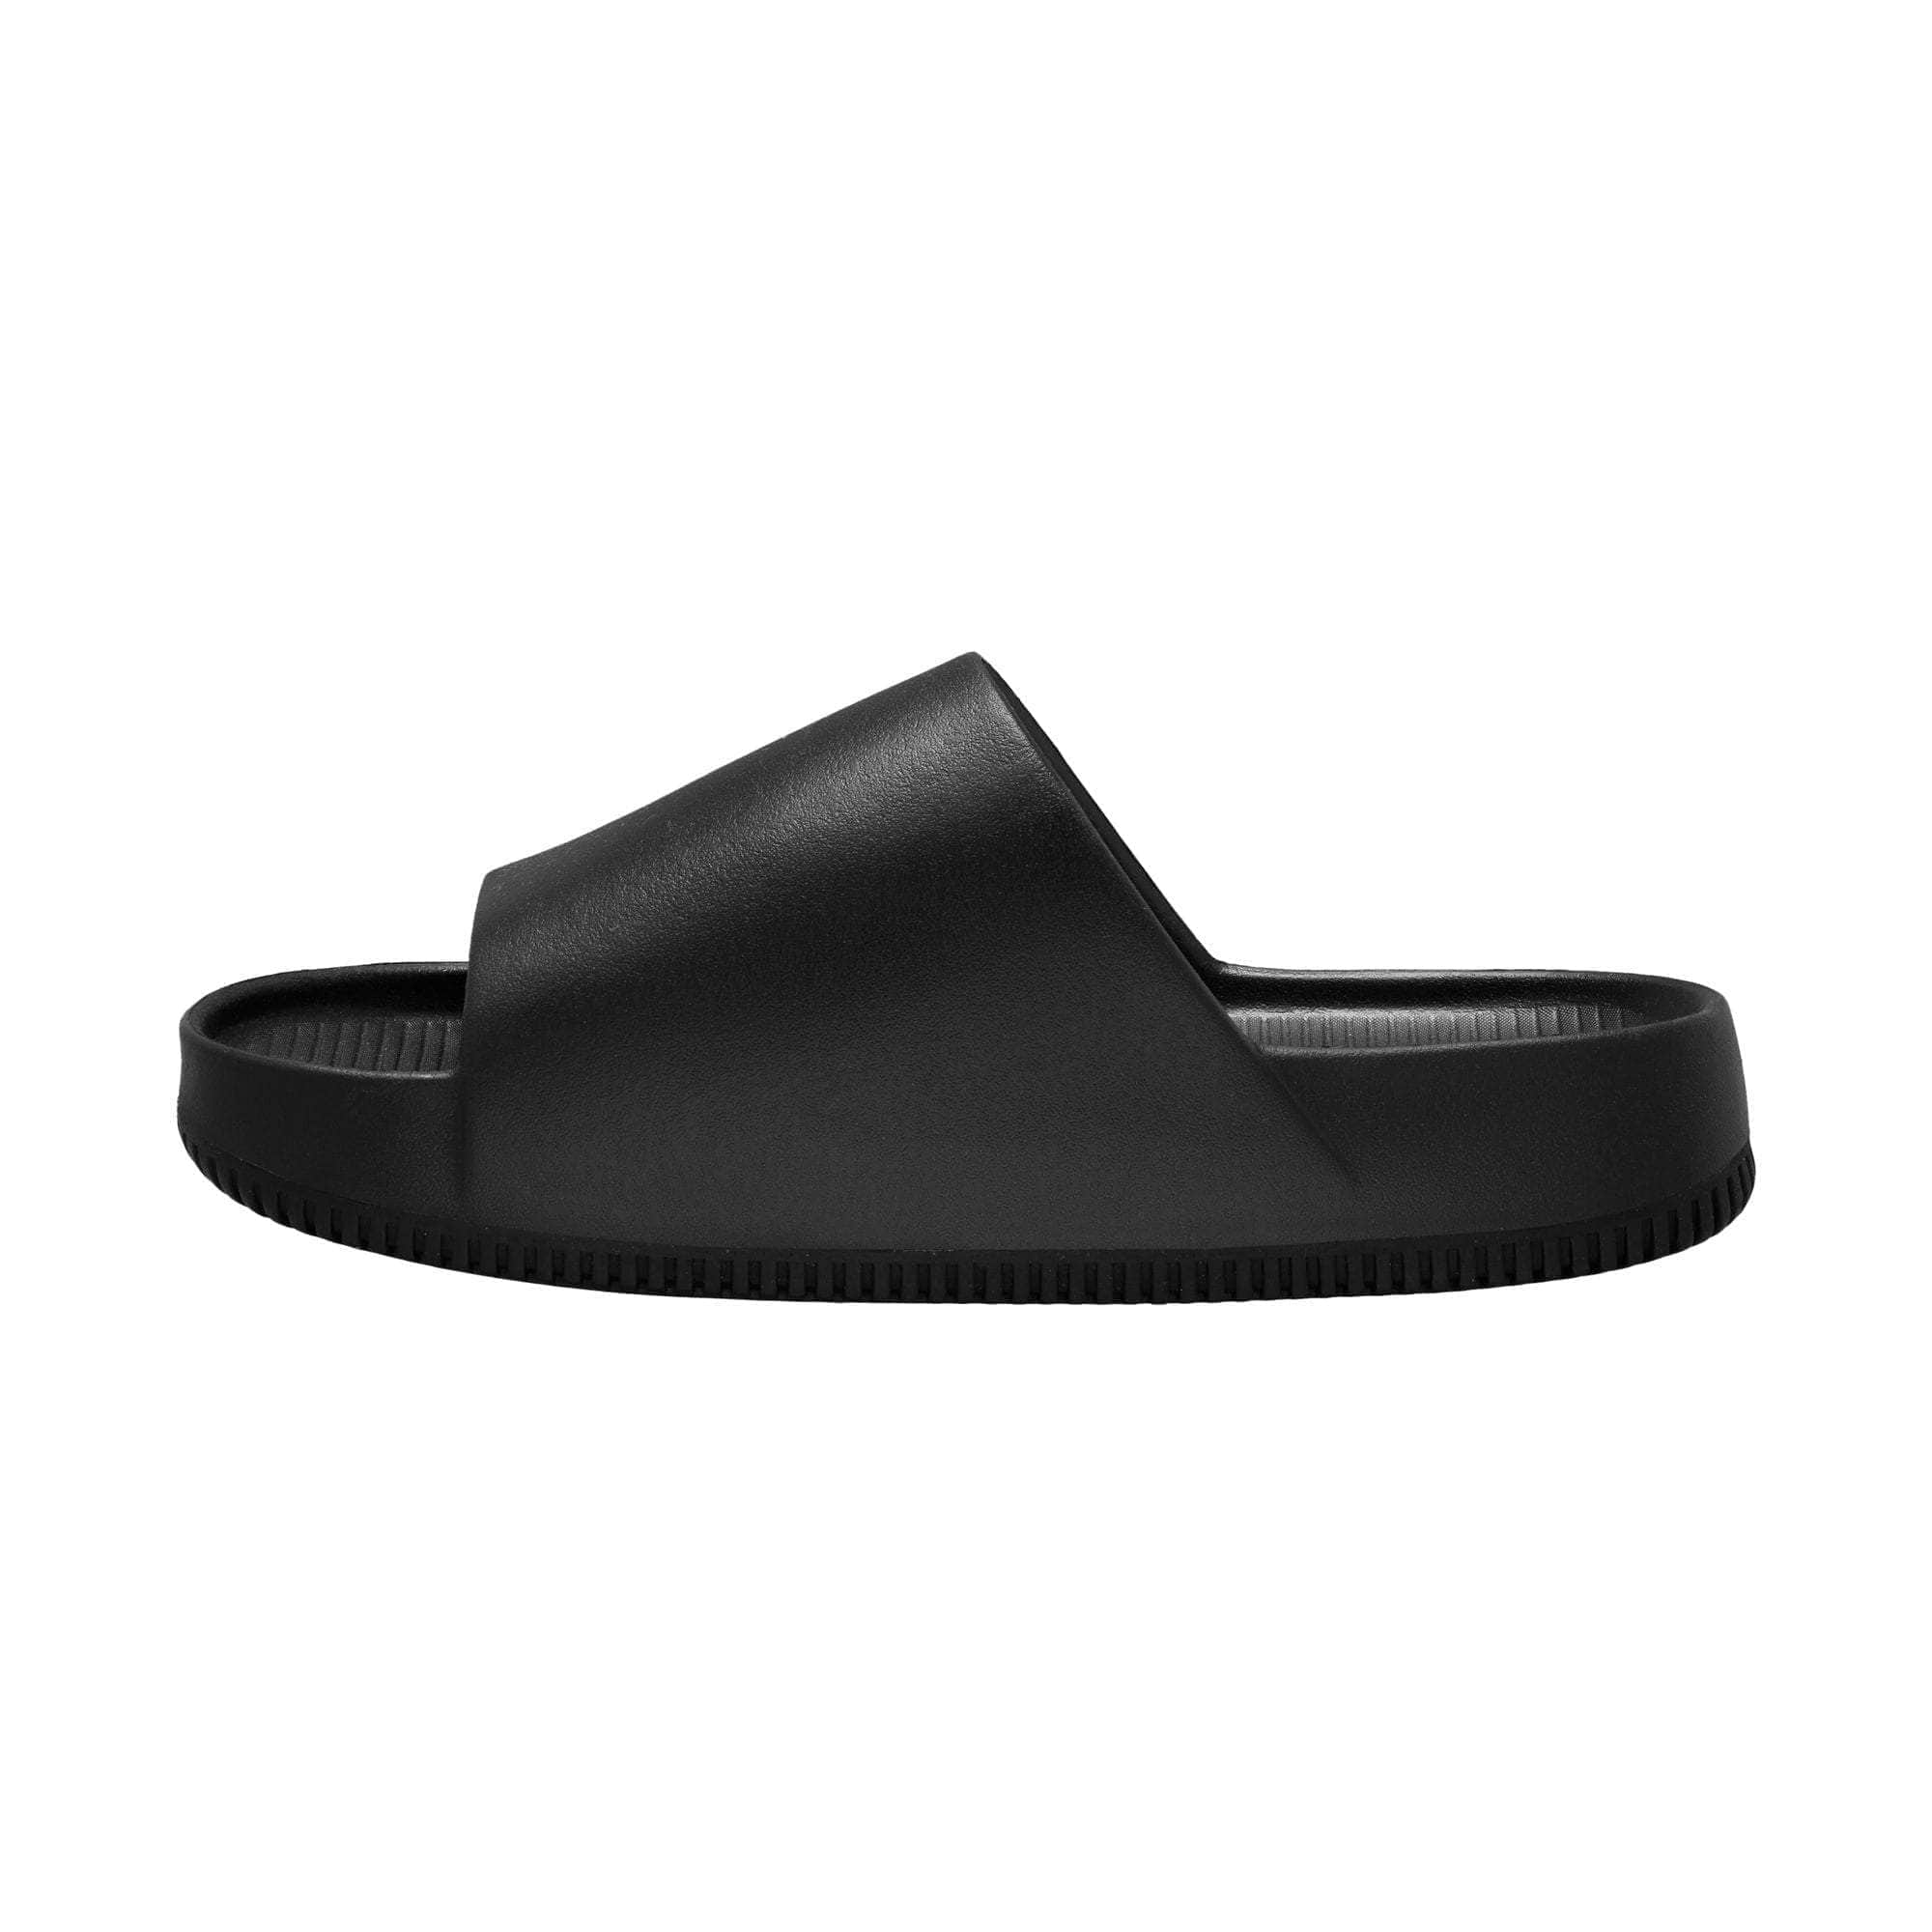 NIKE FOOTWEAR Nike Calm Slide Black - Men's